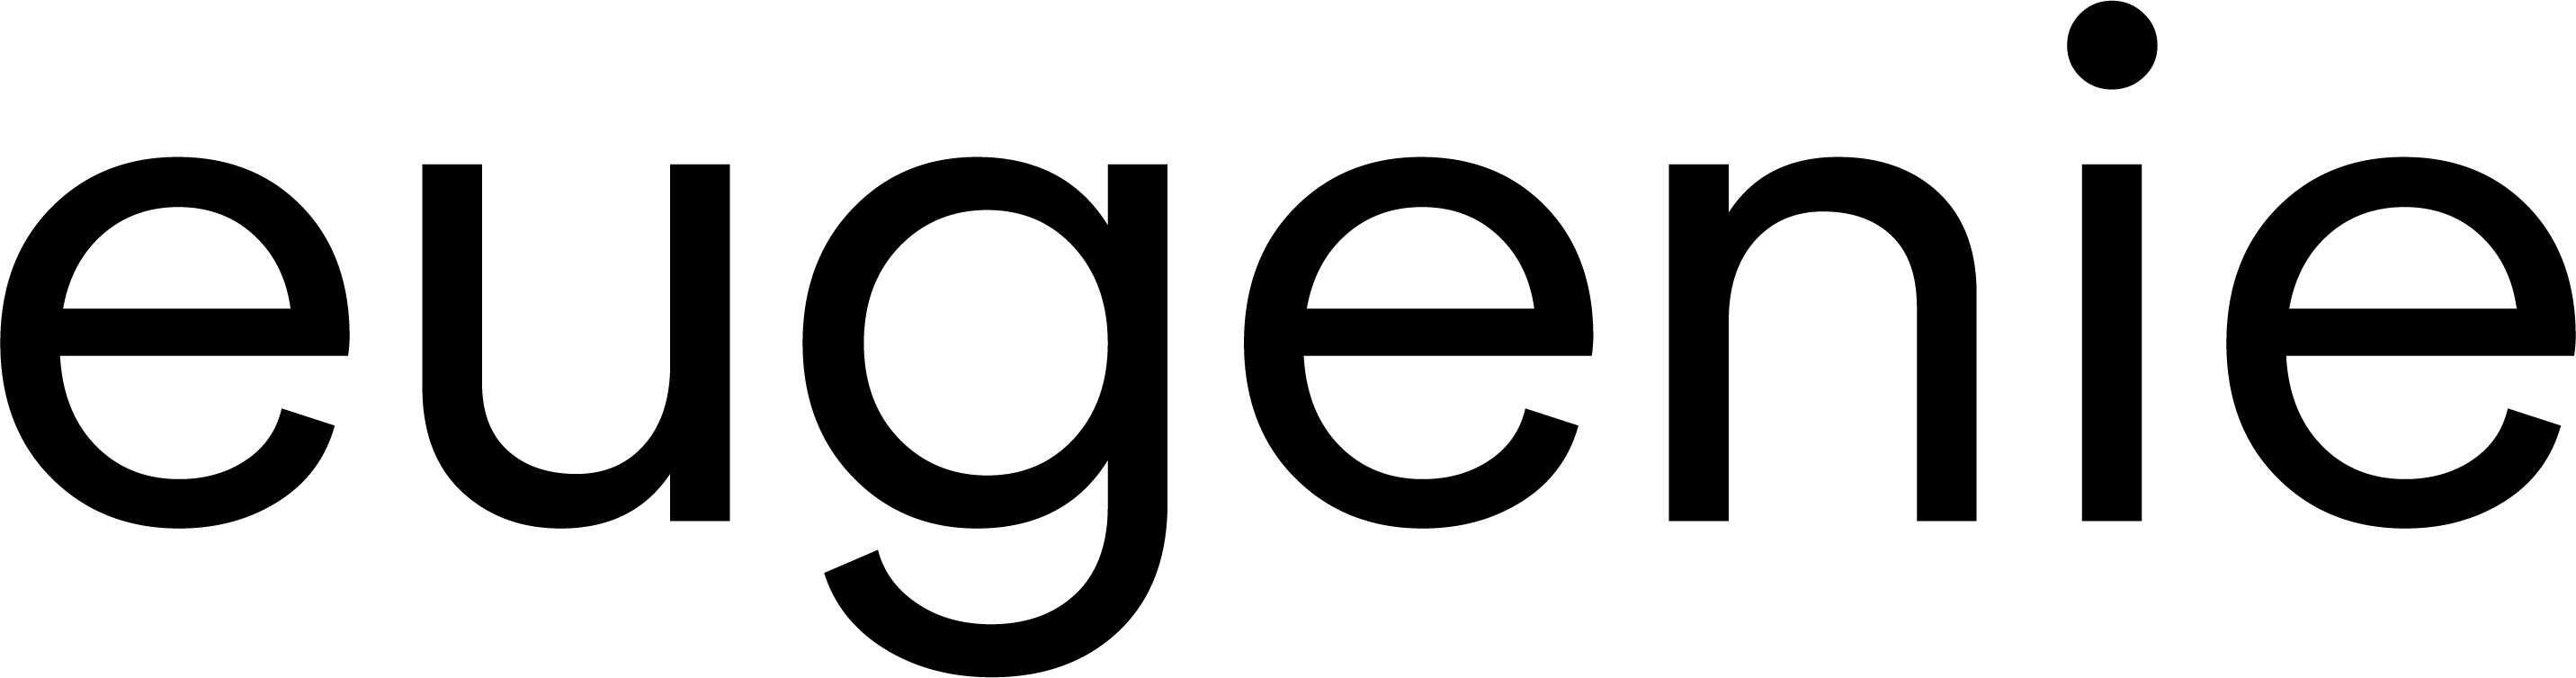 Logo for Eugenie